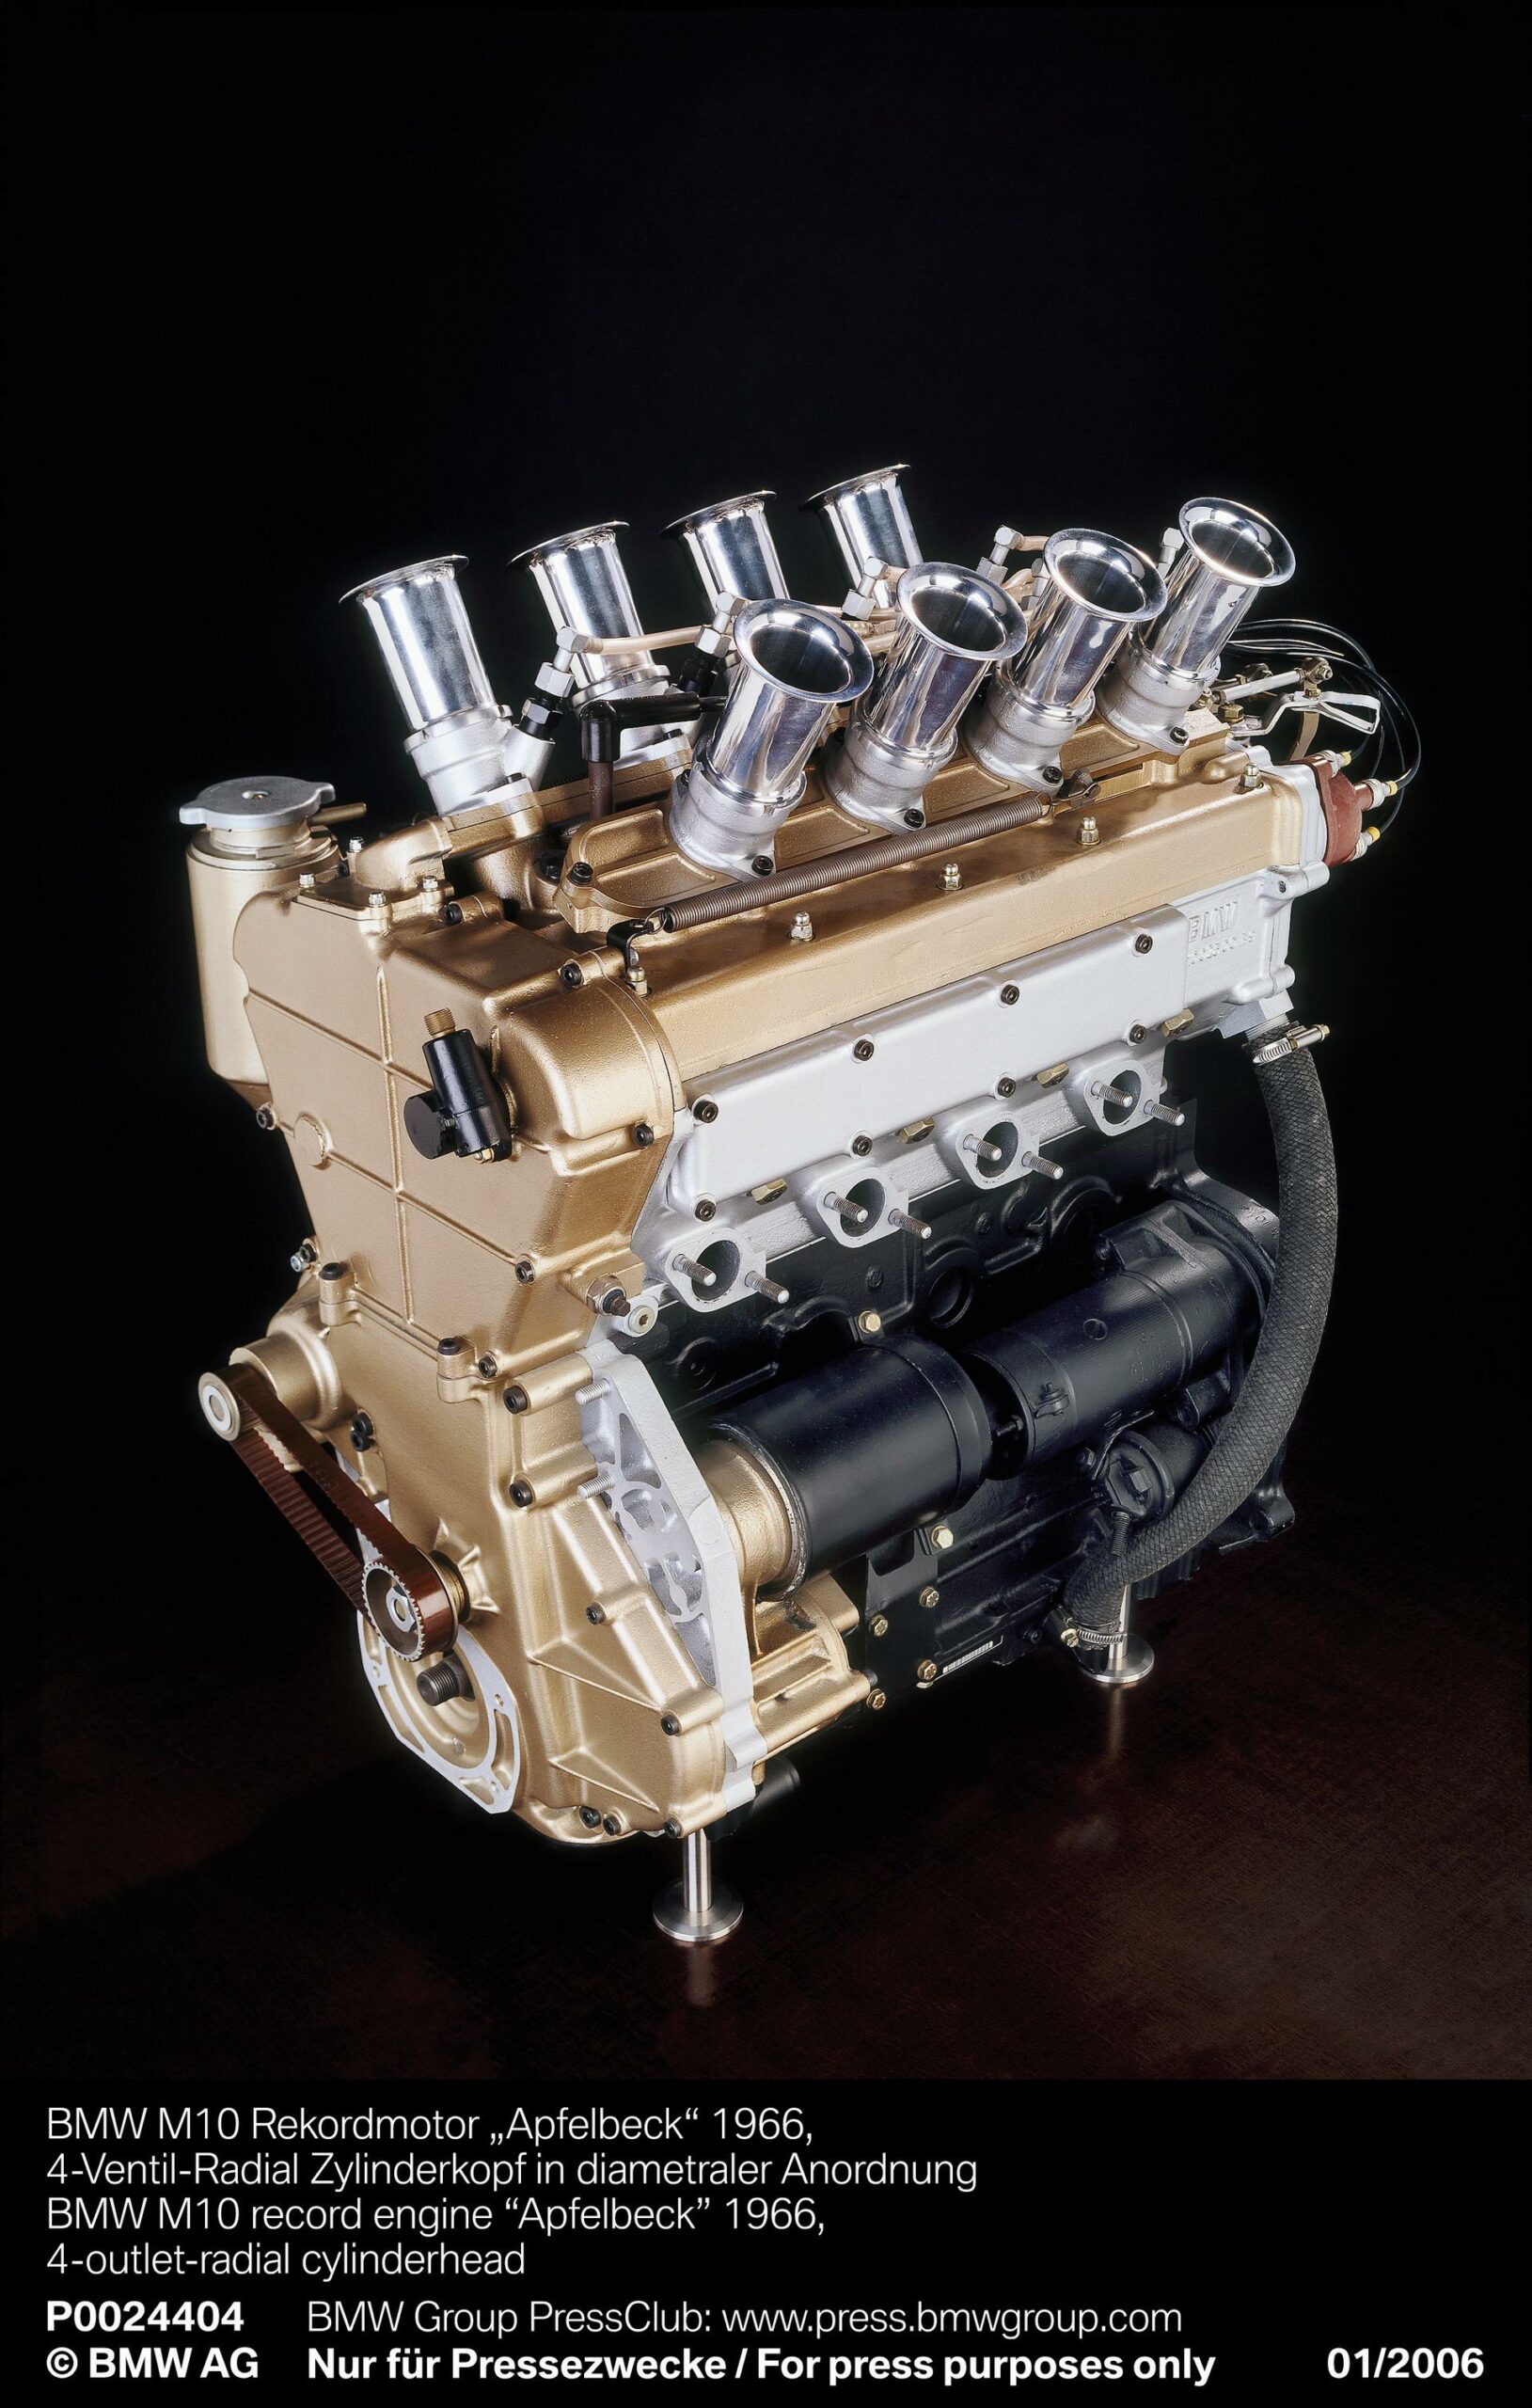 The M10 BMW Engine—BMW’s Longest-Running Power Plant